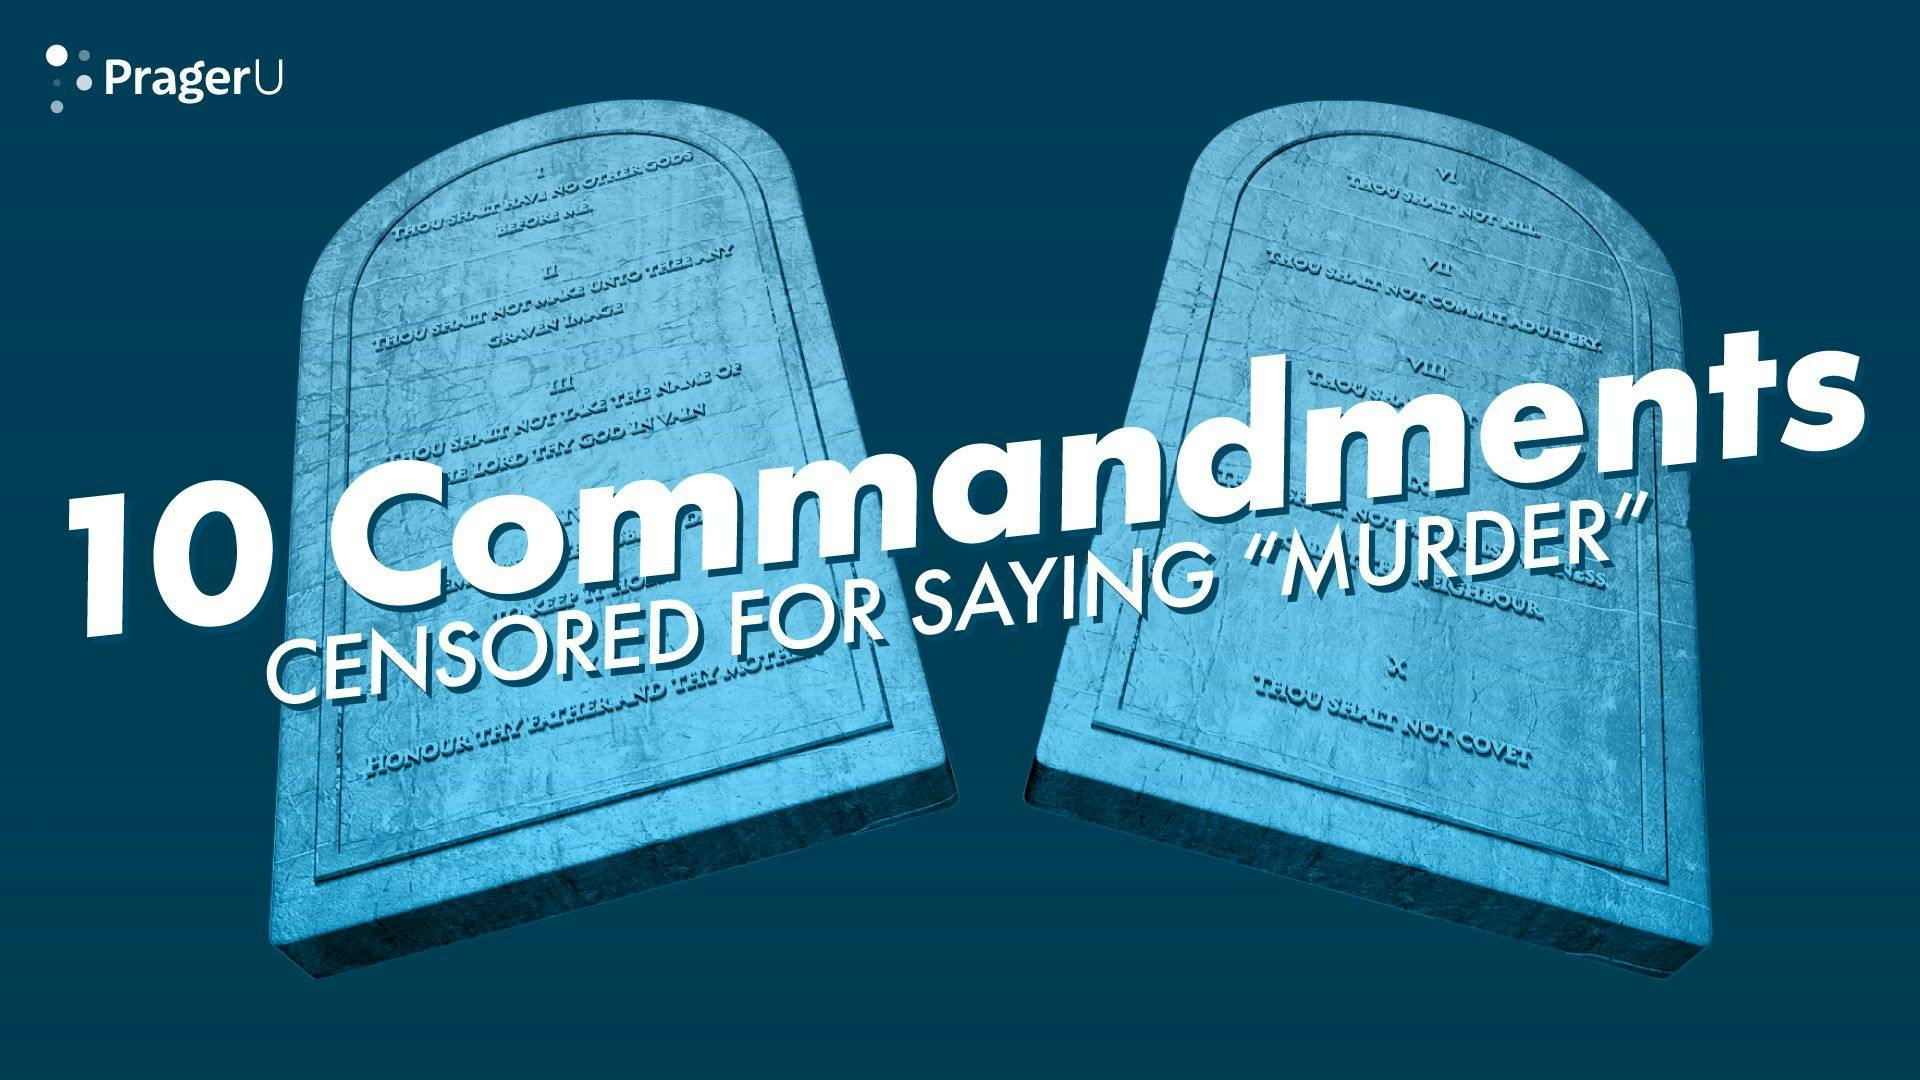 Google is Censoring the 10 Commandments